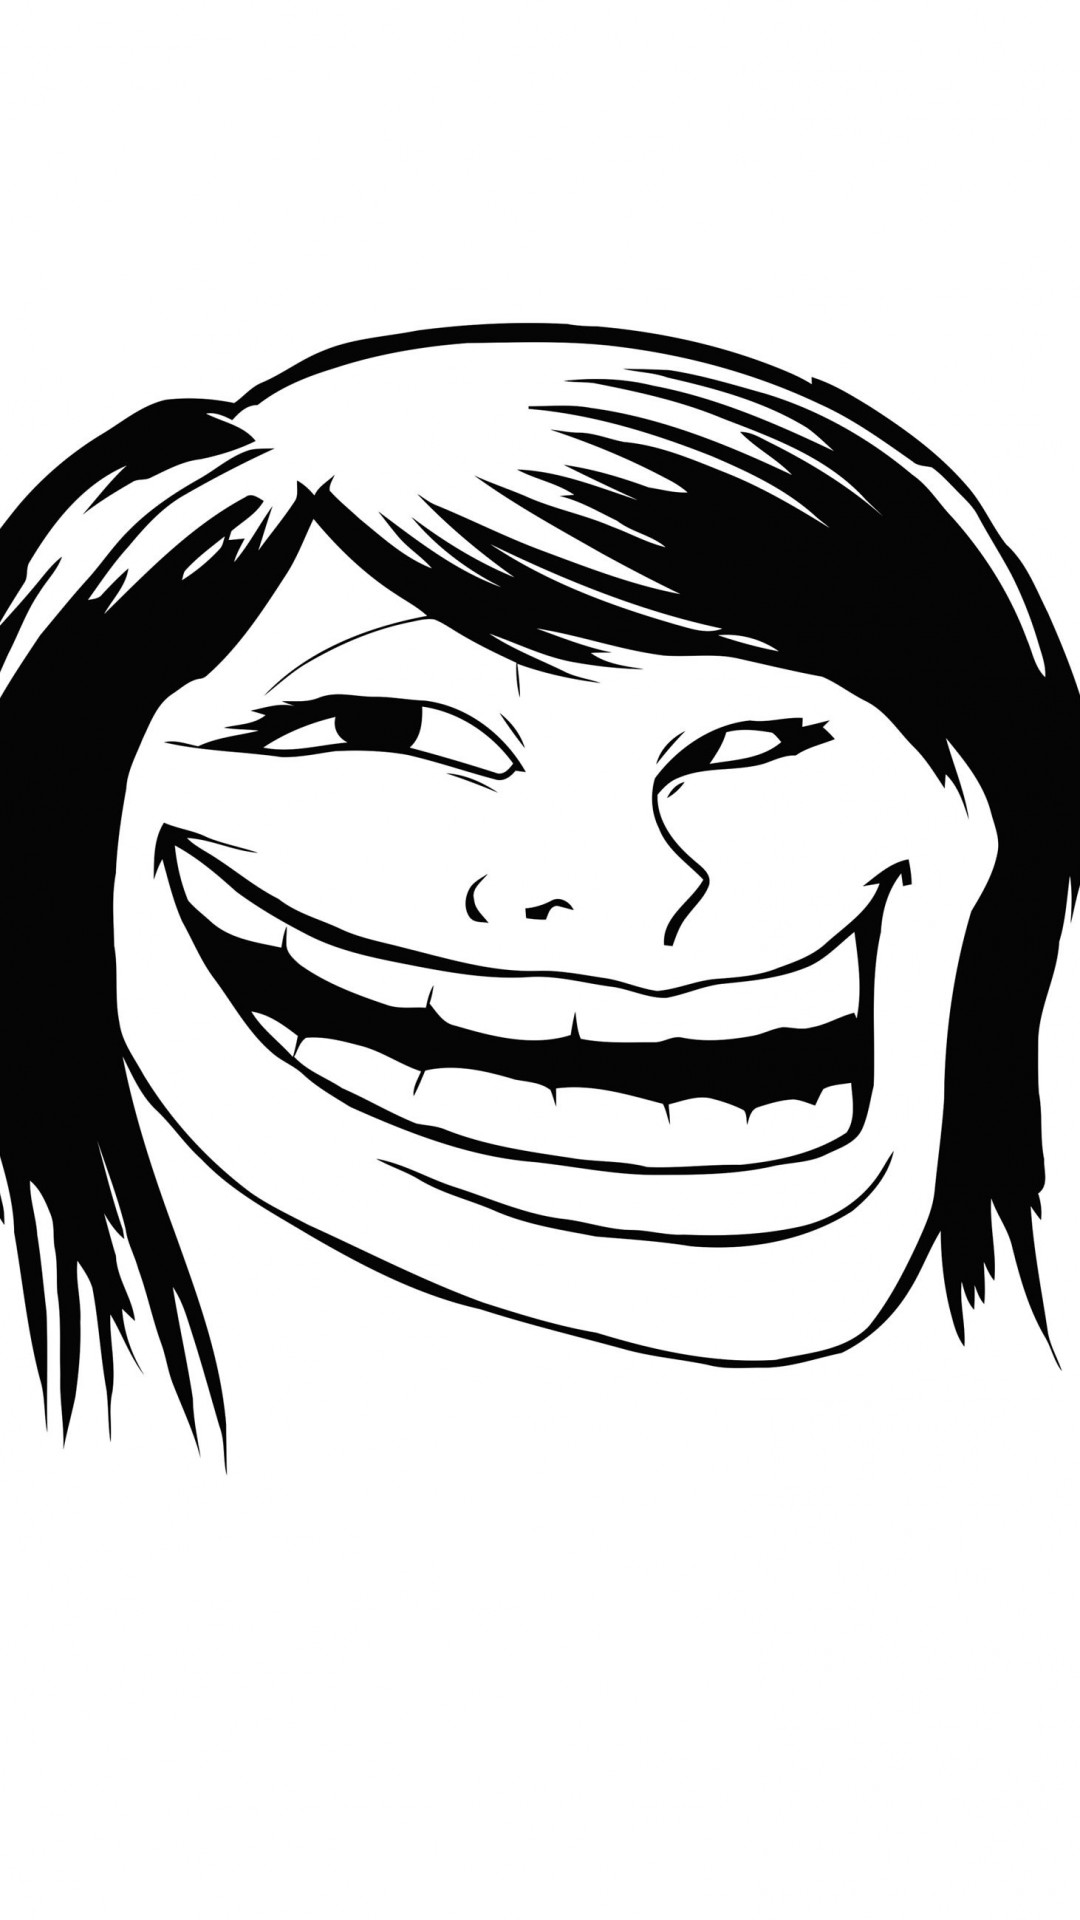 Female Troll Face Meme Wallpaper for SAMSUNG Galaxy S5